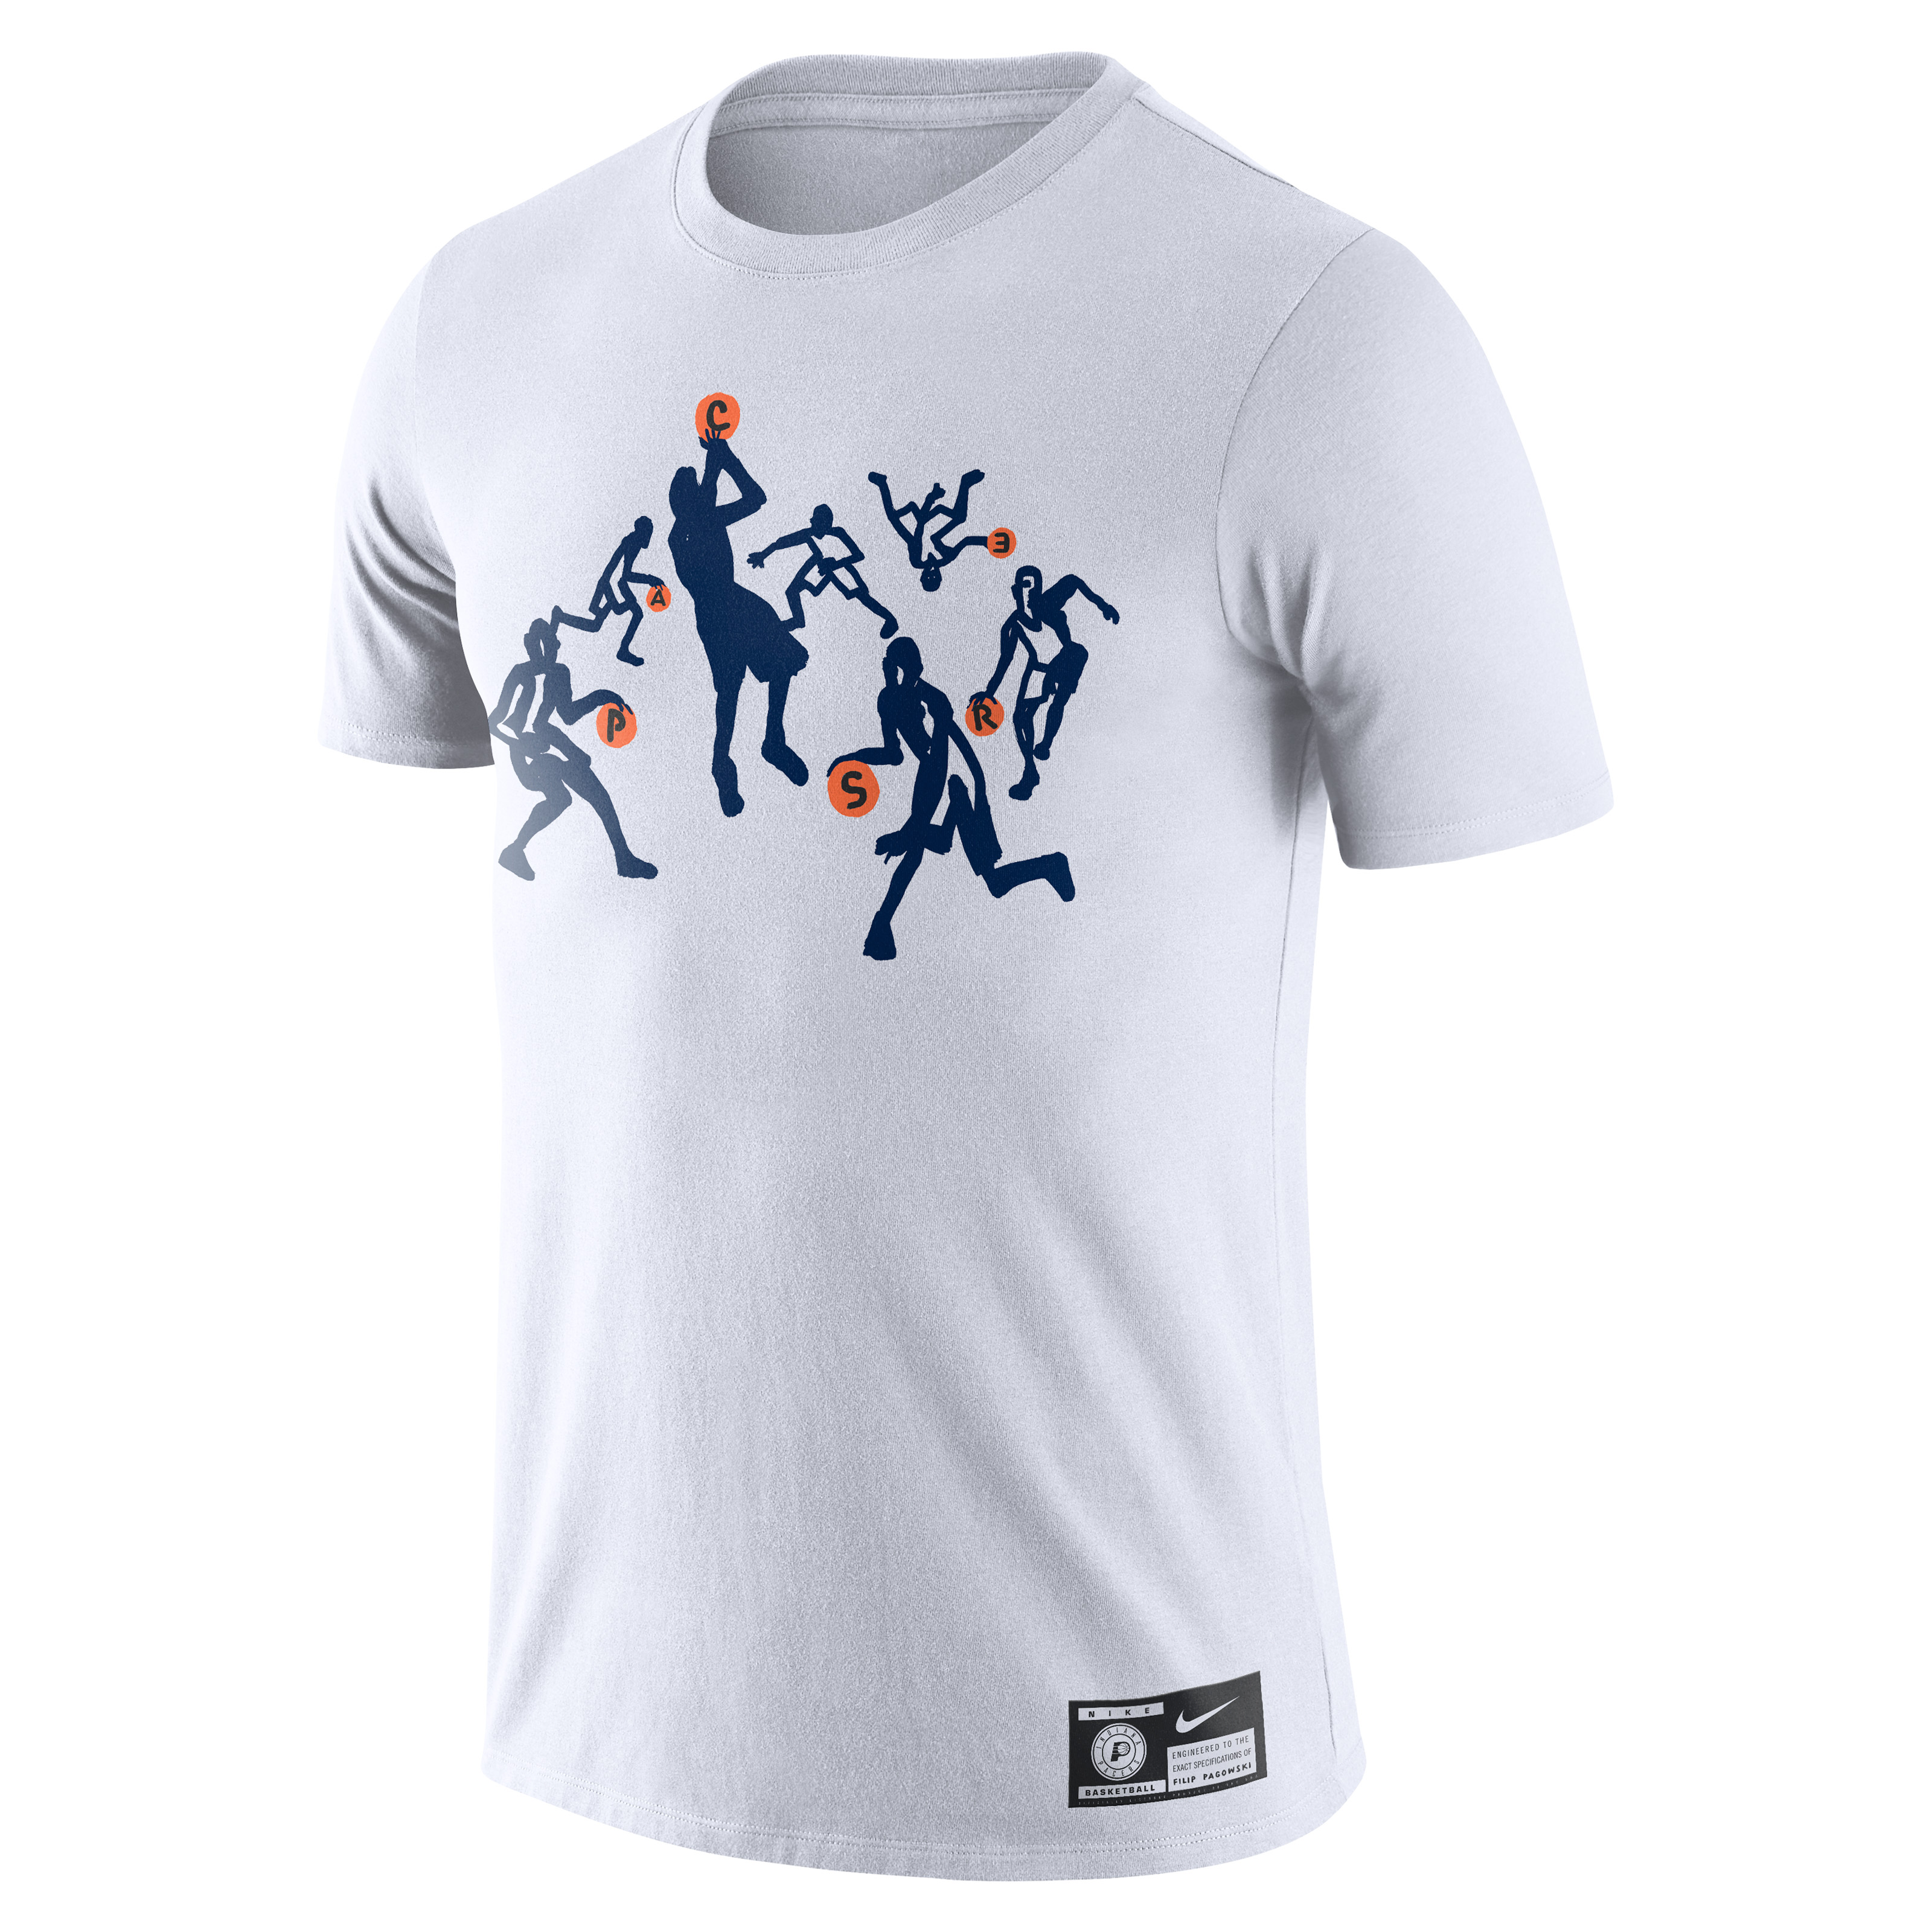 Filip Pagowski Nike T shirt &#x27;Indiana Pacers&#x27;